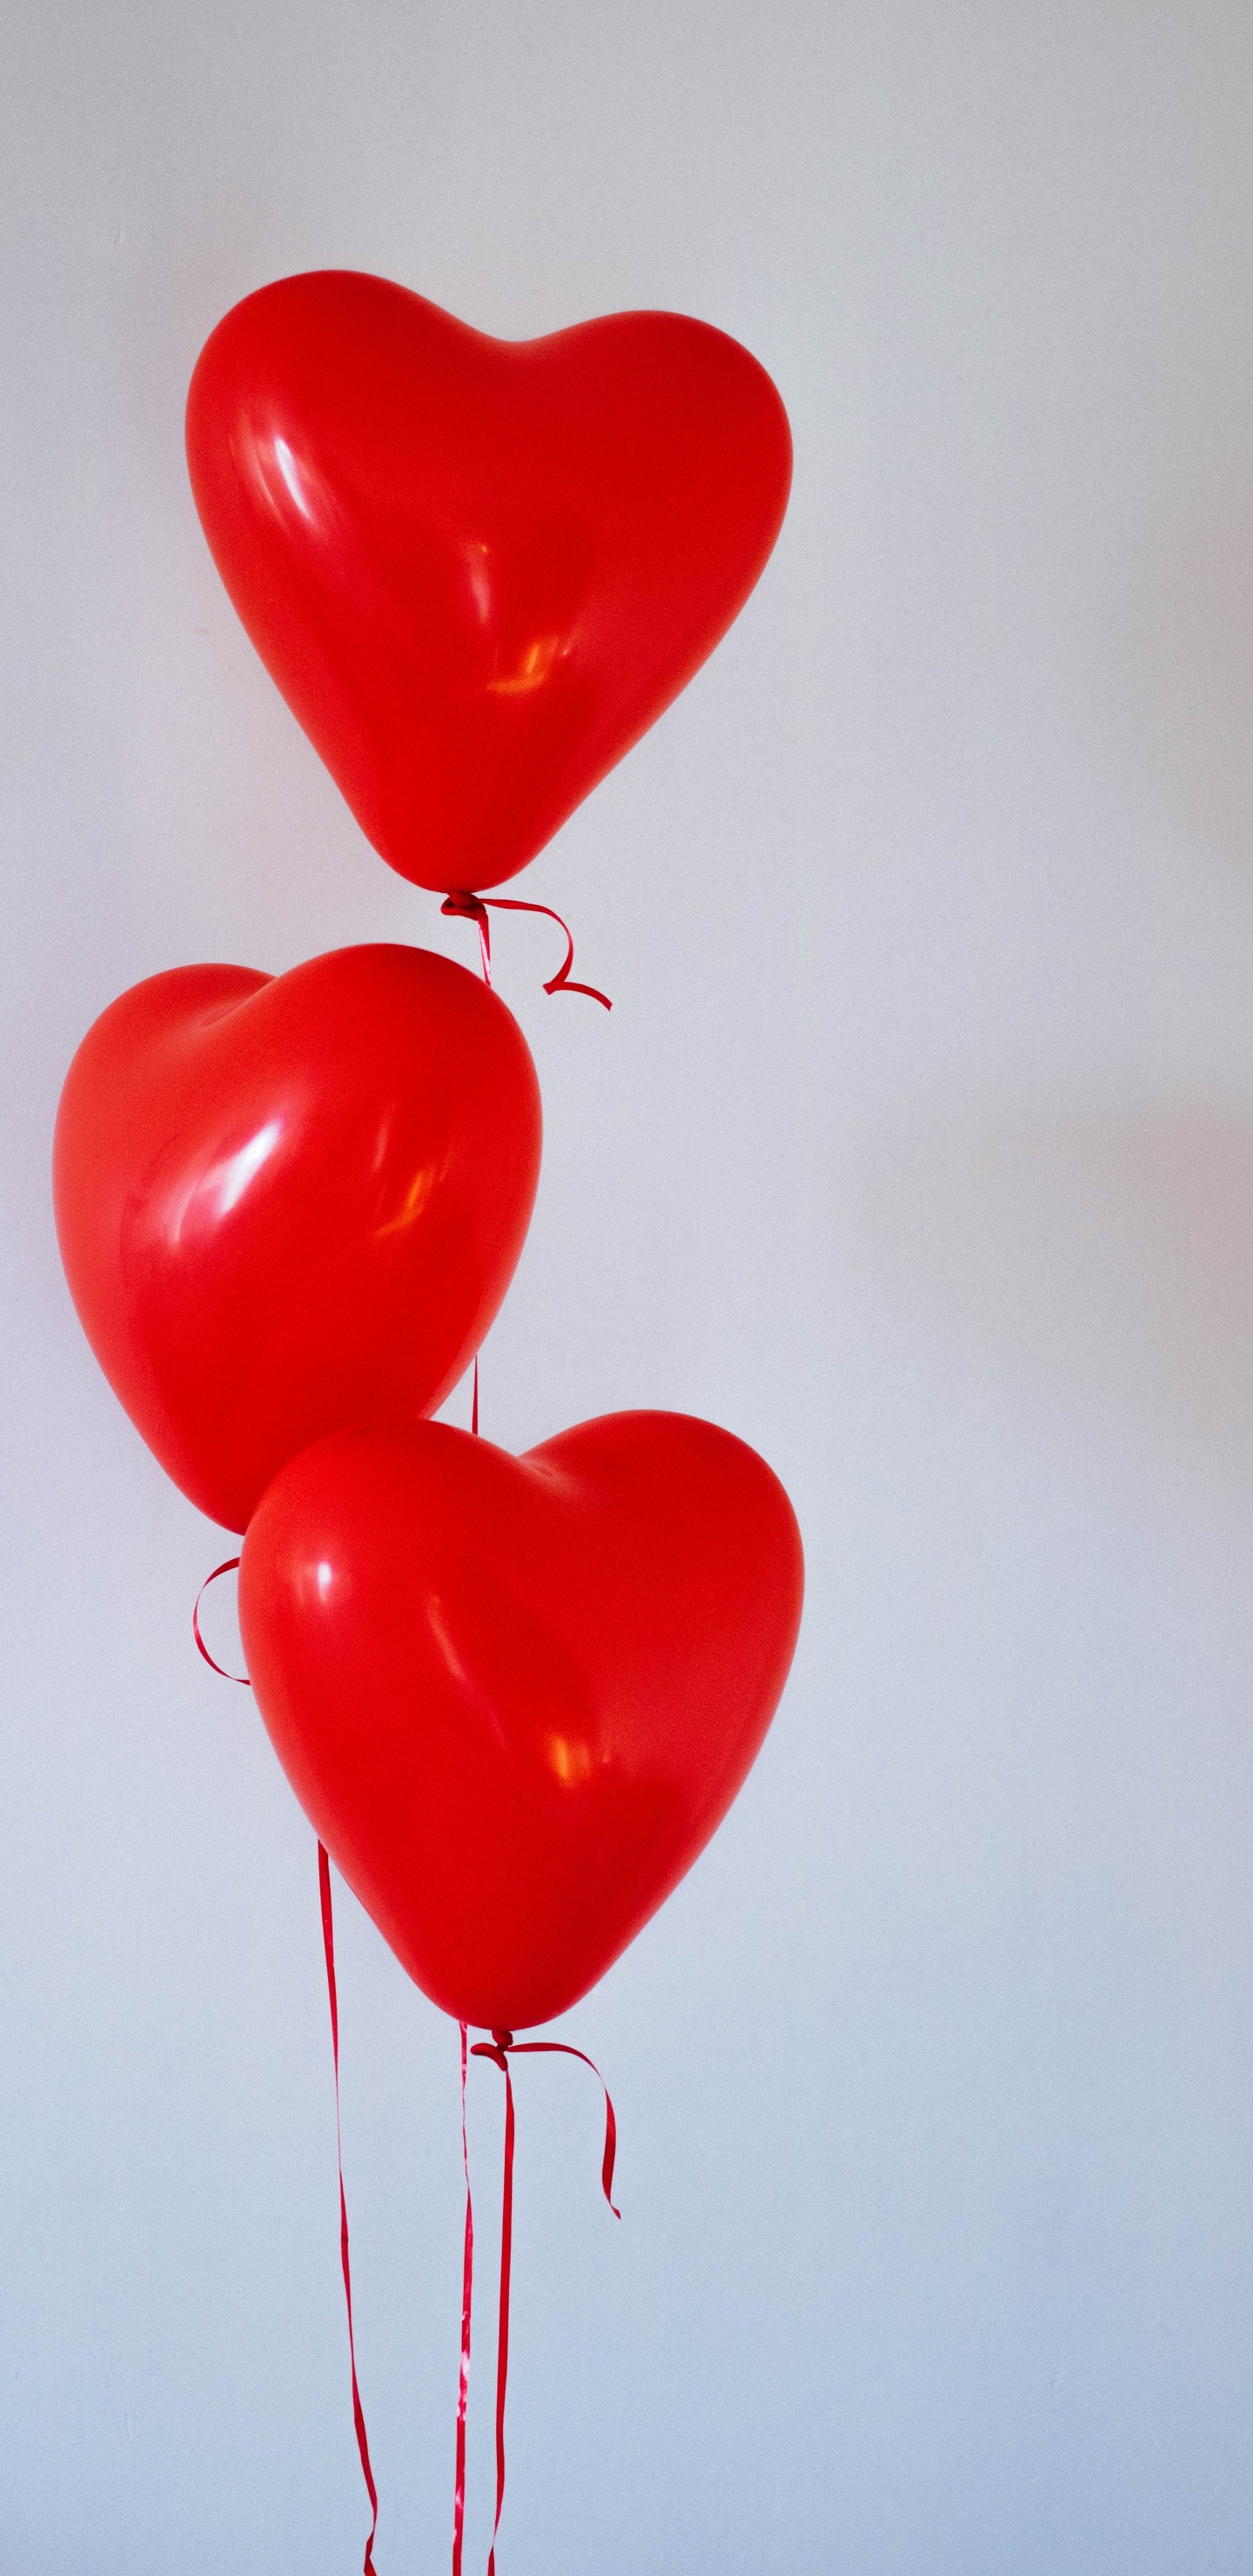 Balloon, Valentines Day, Heart, Red, Organ. Wallpaper in 1440x2960 Resolution